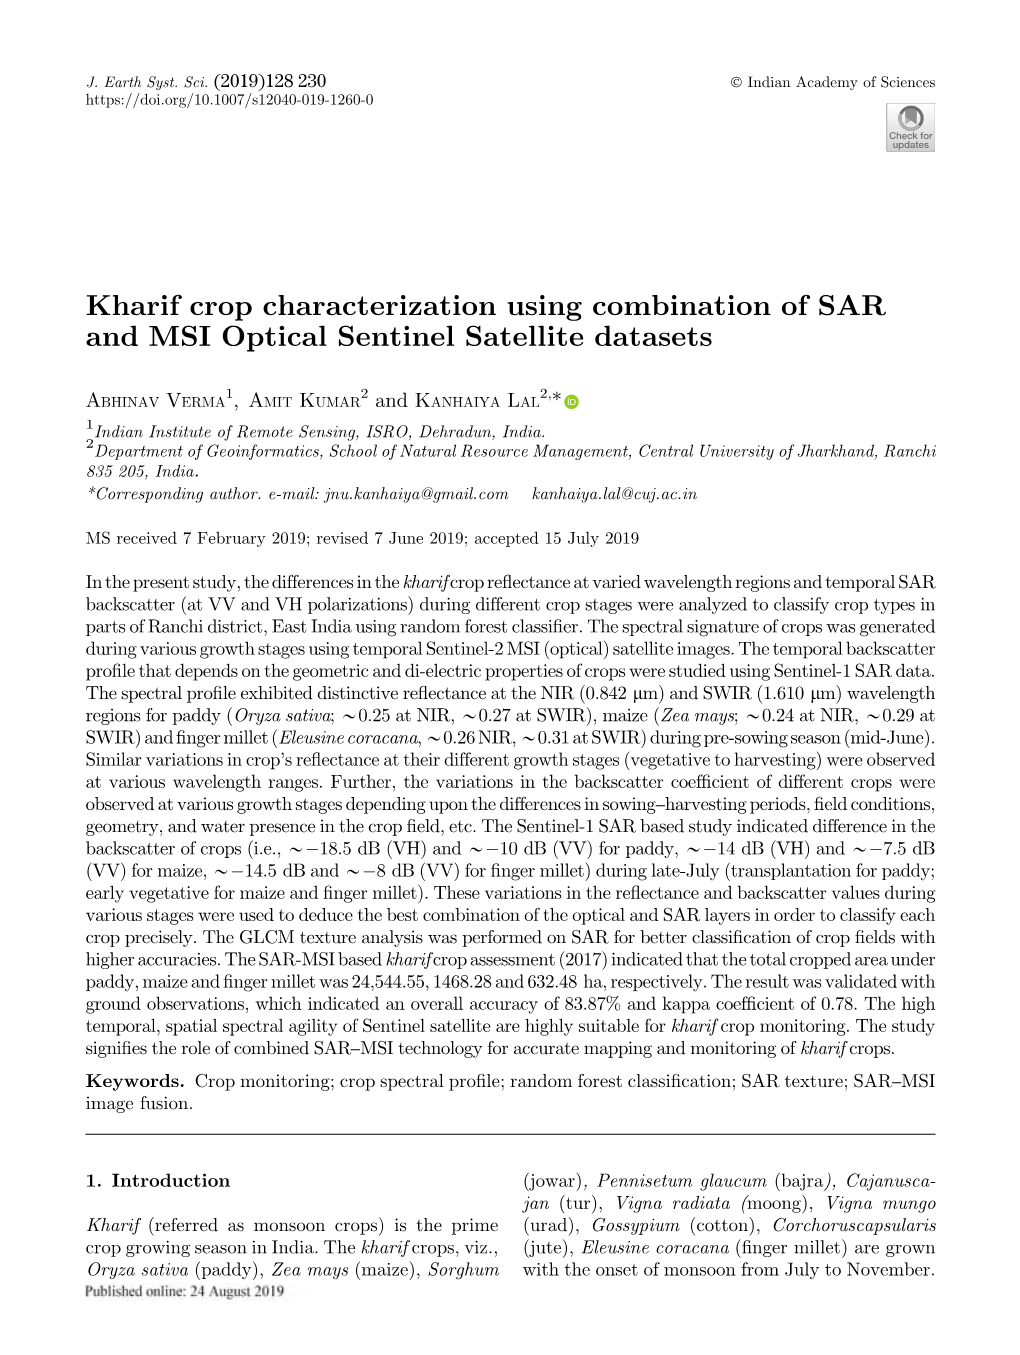 Kharif Crop Characterization Using Combination of SAR and MSI Optical Sentinel Satellite Datasets